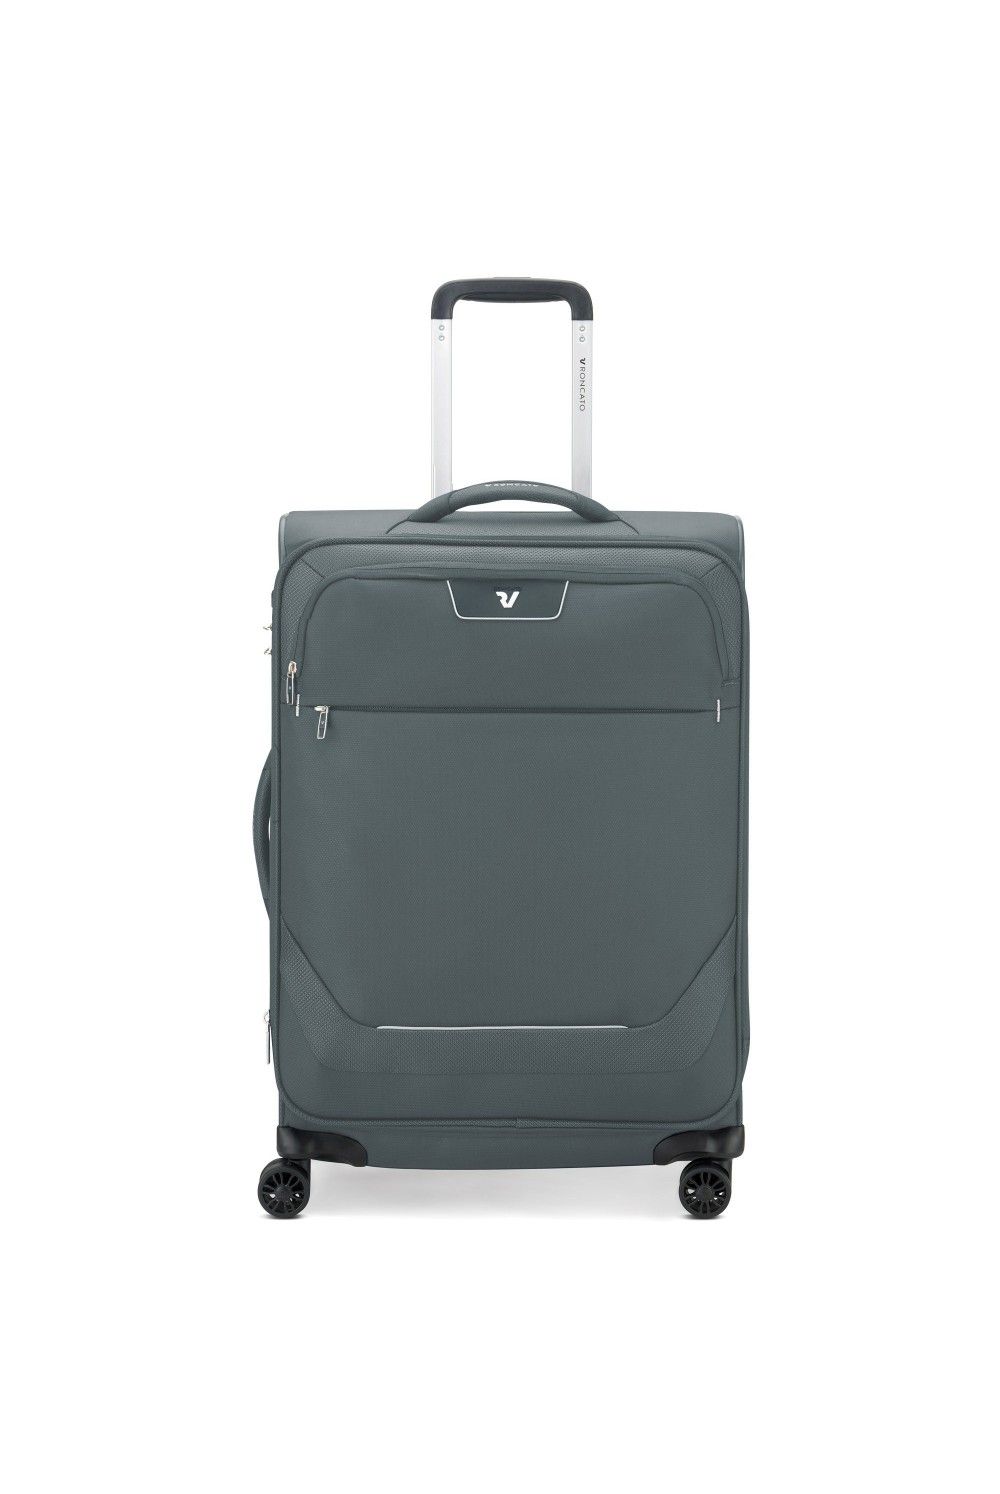 Suitcase Roncato Joy 63cm Medium 4 wheels